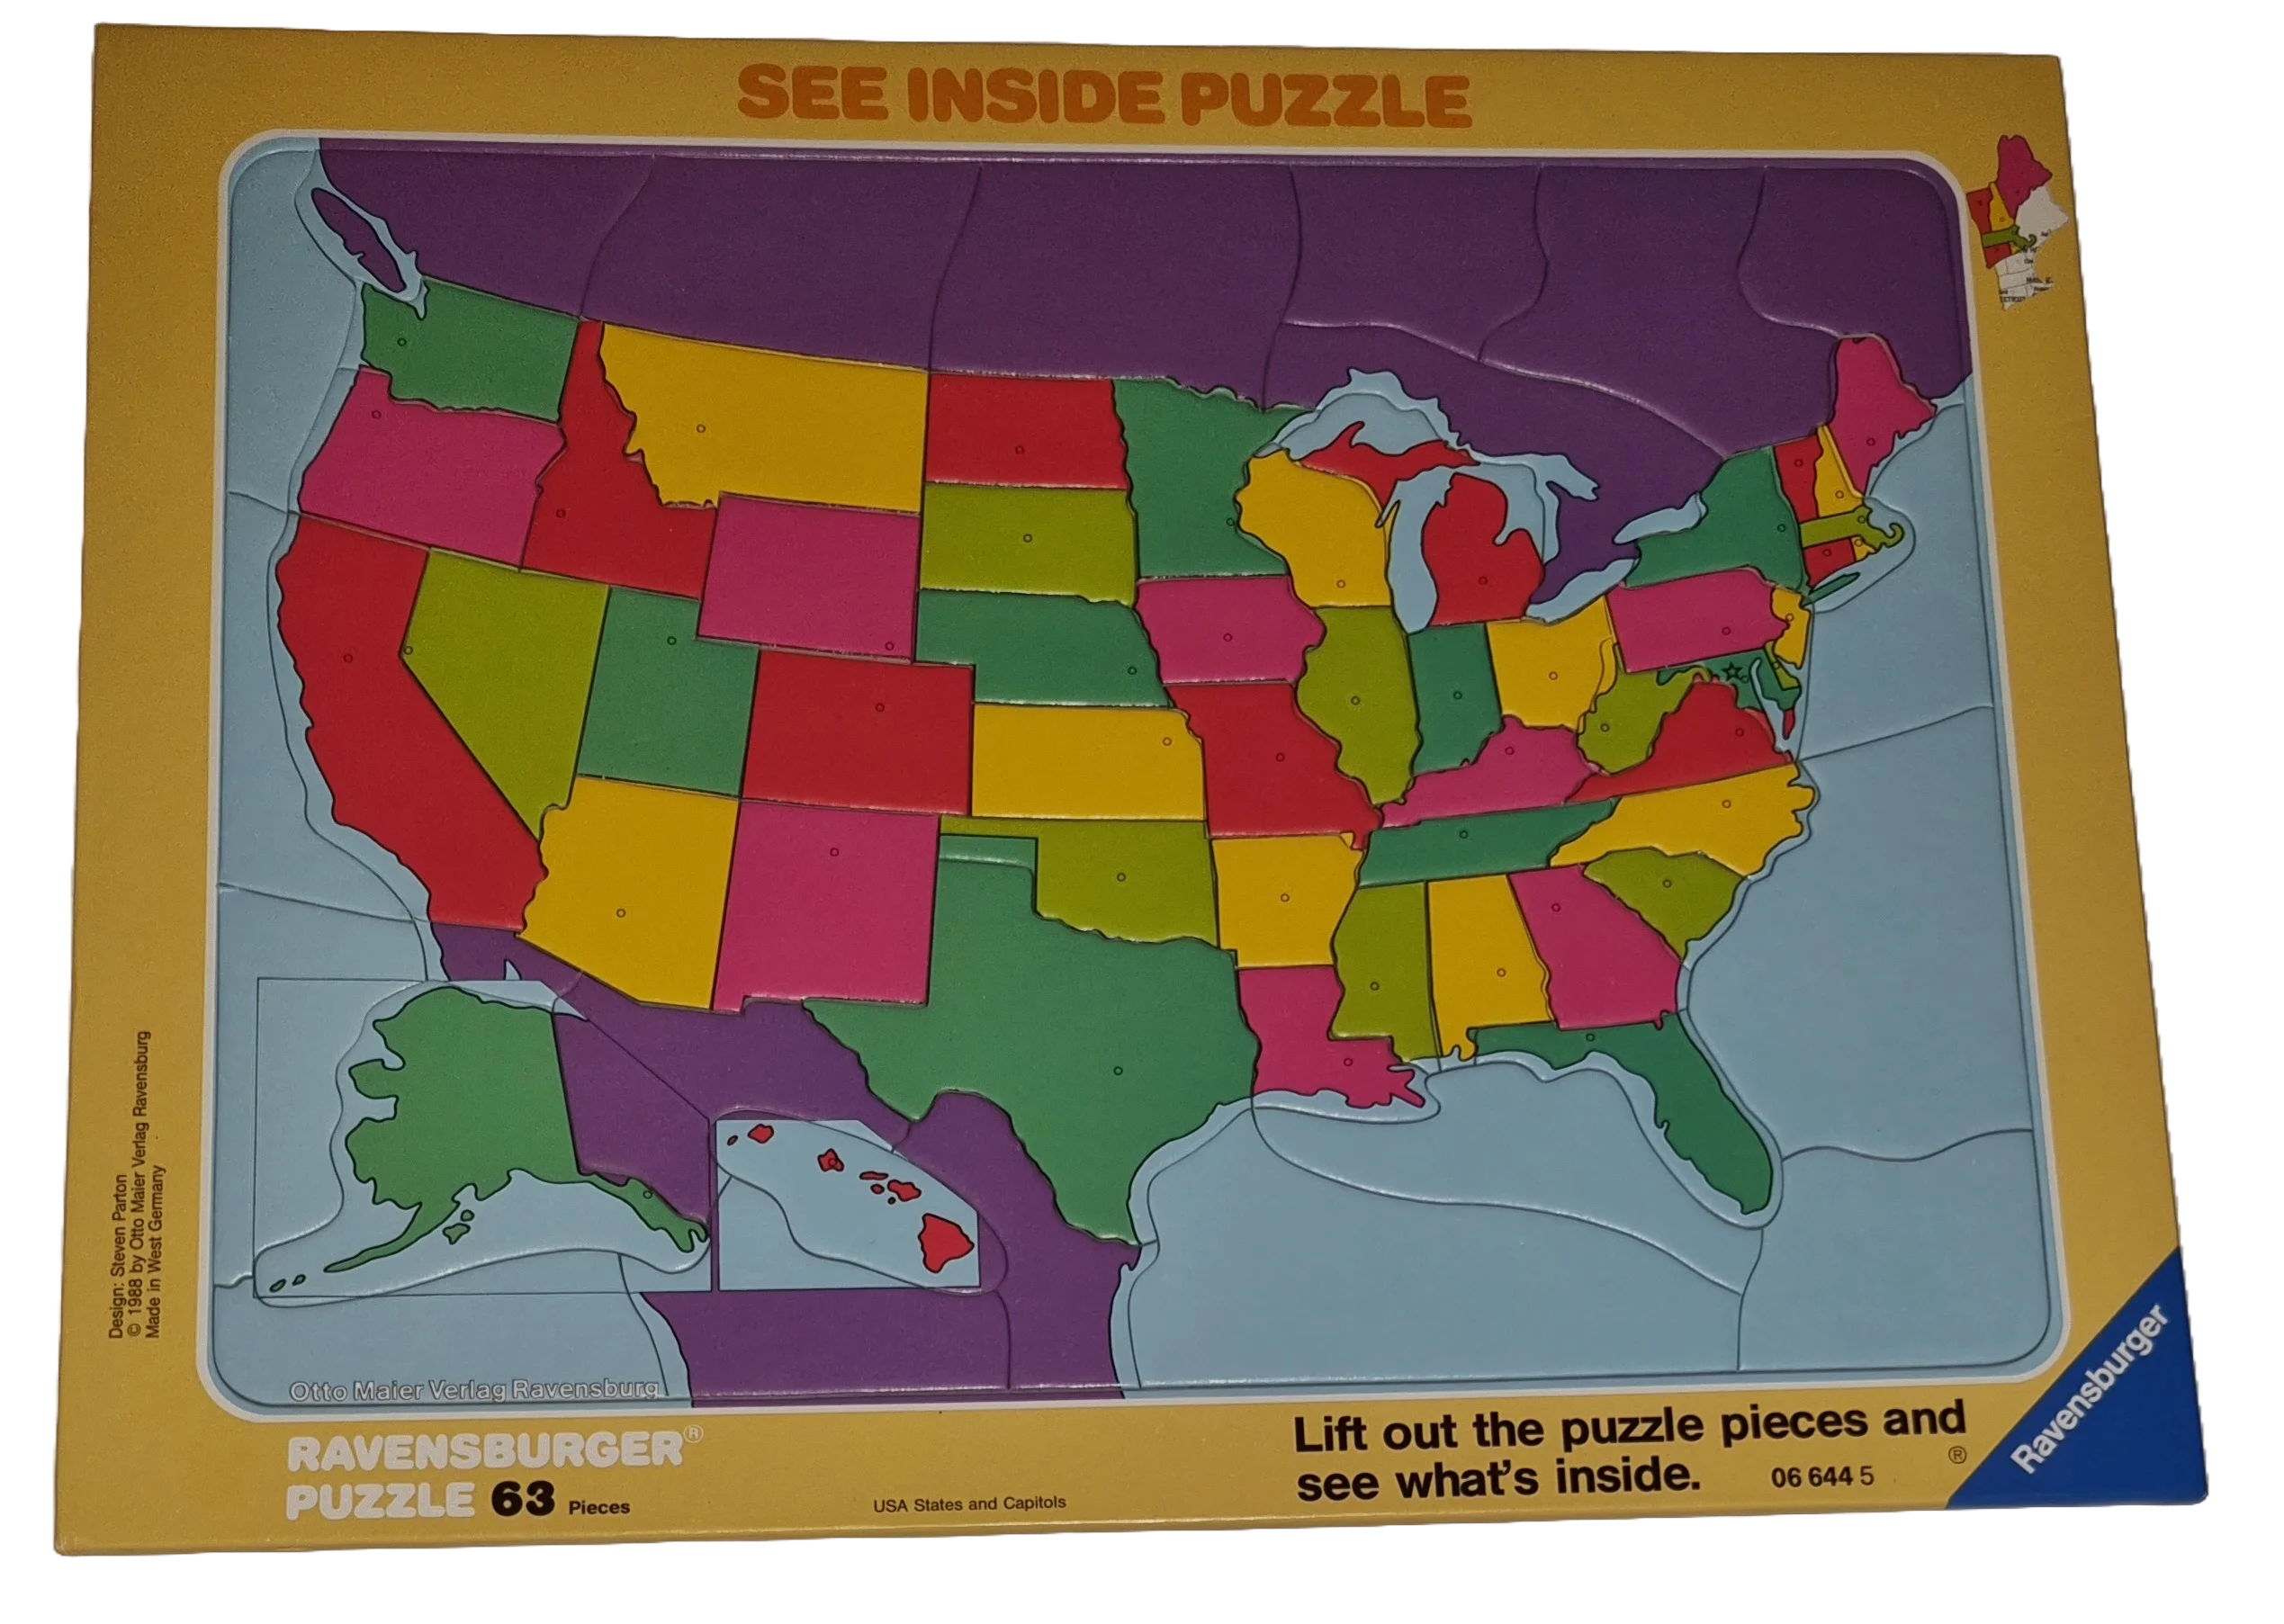 Ravensburger See inside Puzzle Rahmenpuzzle USA States and Capitals 066445